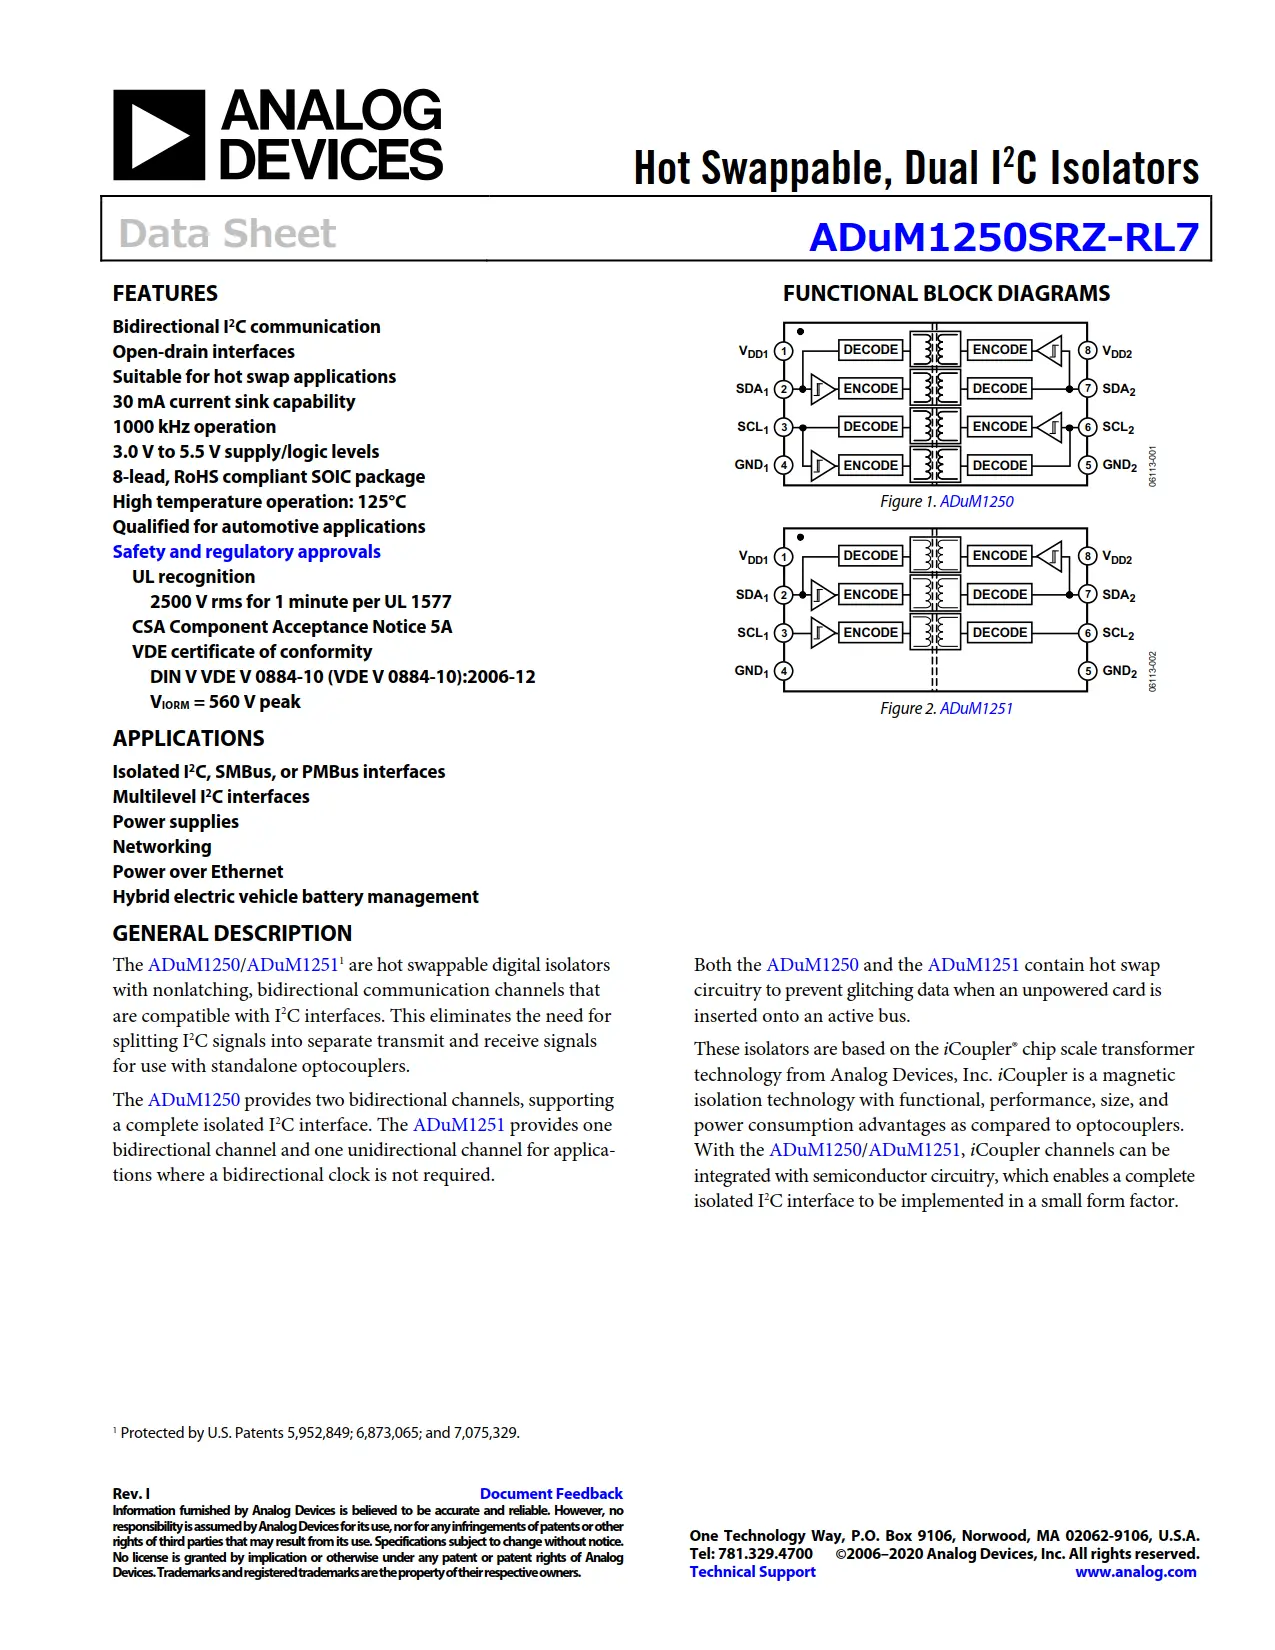 ADuM1250SRZ-RL7 DataSheet